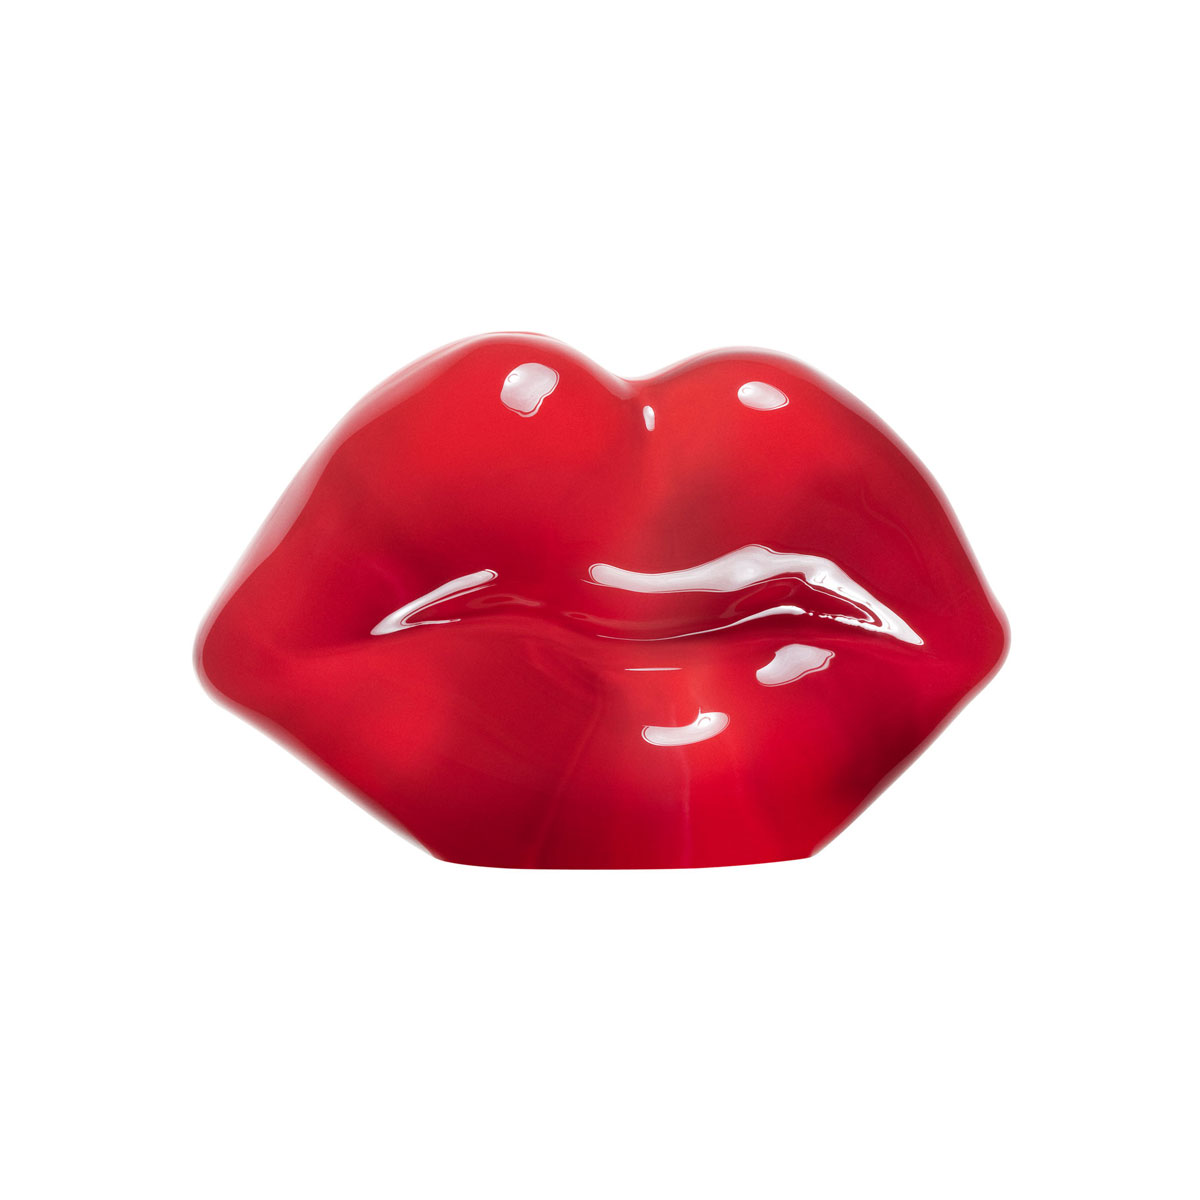 Kosta Boda Make Up Hot Lips, Red